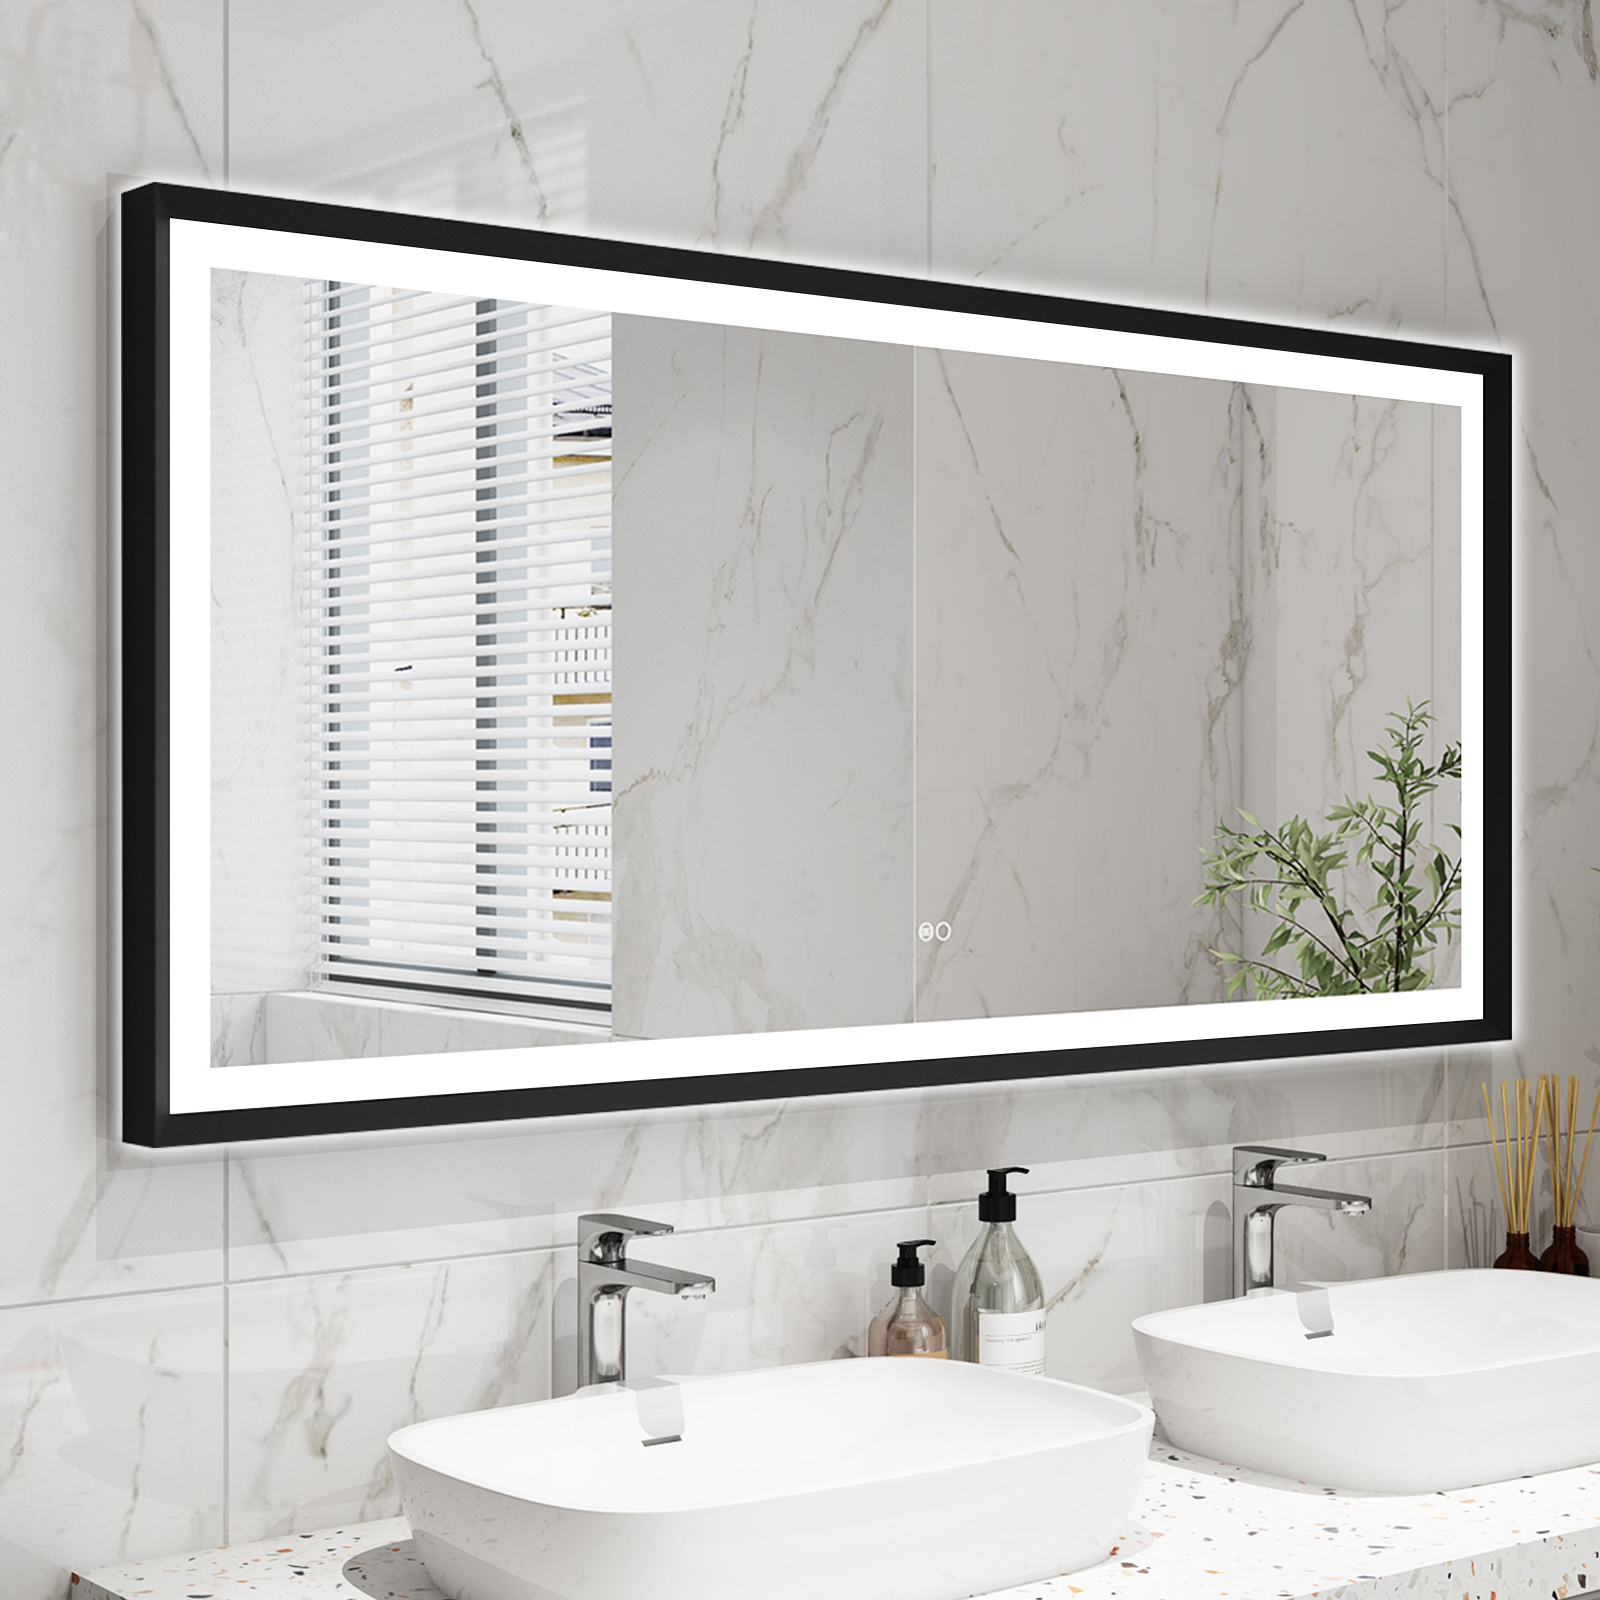 24”x36 Led Bathroom Mirror with Antifog, Dimmer, Adjustable Color Temperature, Smart Bathroom Led Mirror with Black Frame - 2